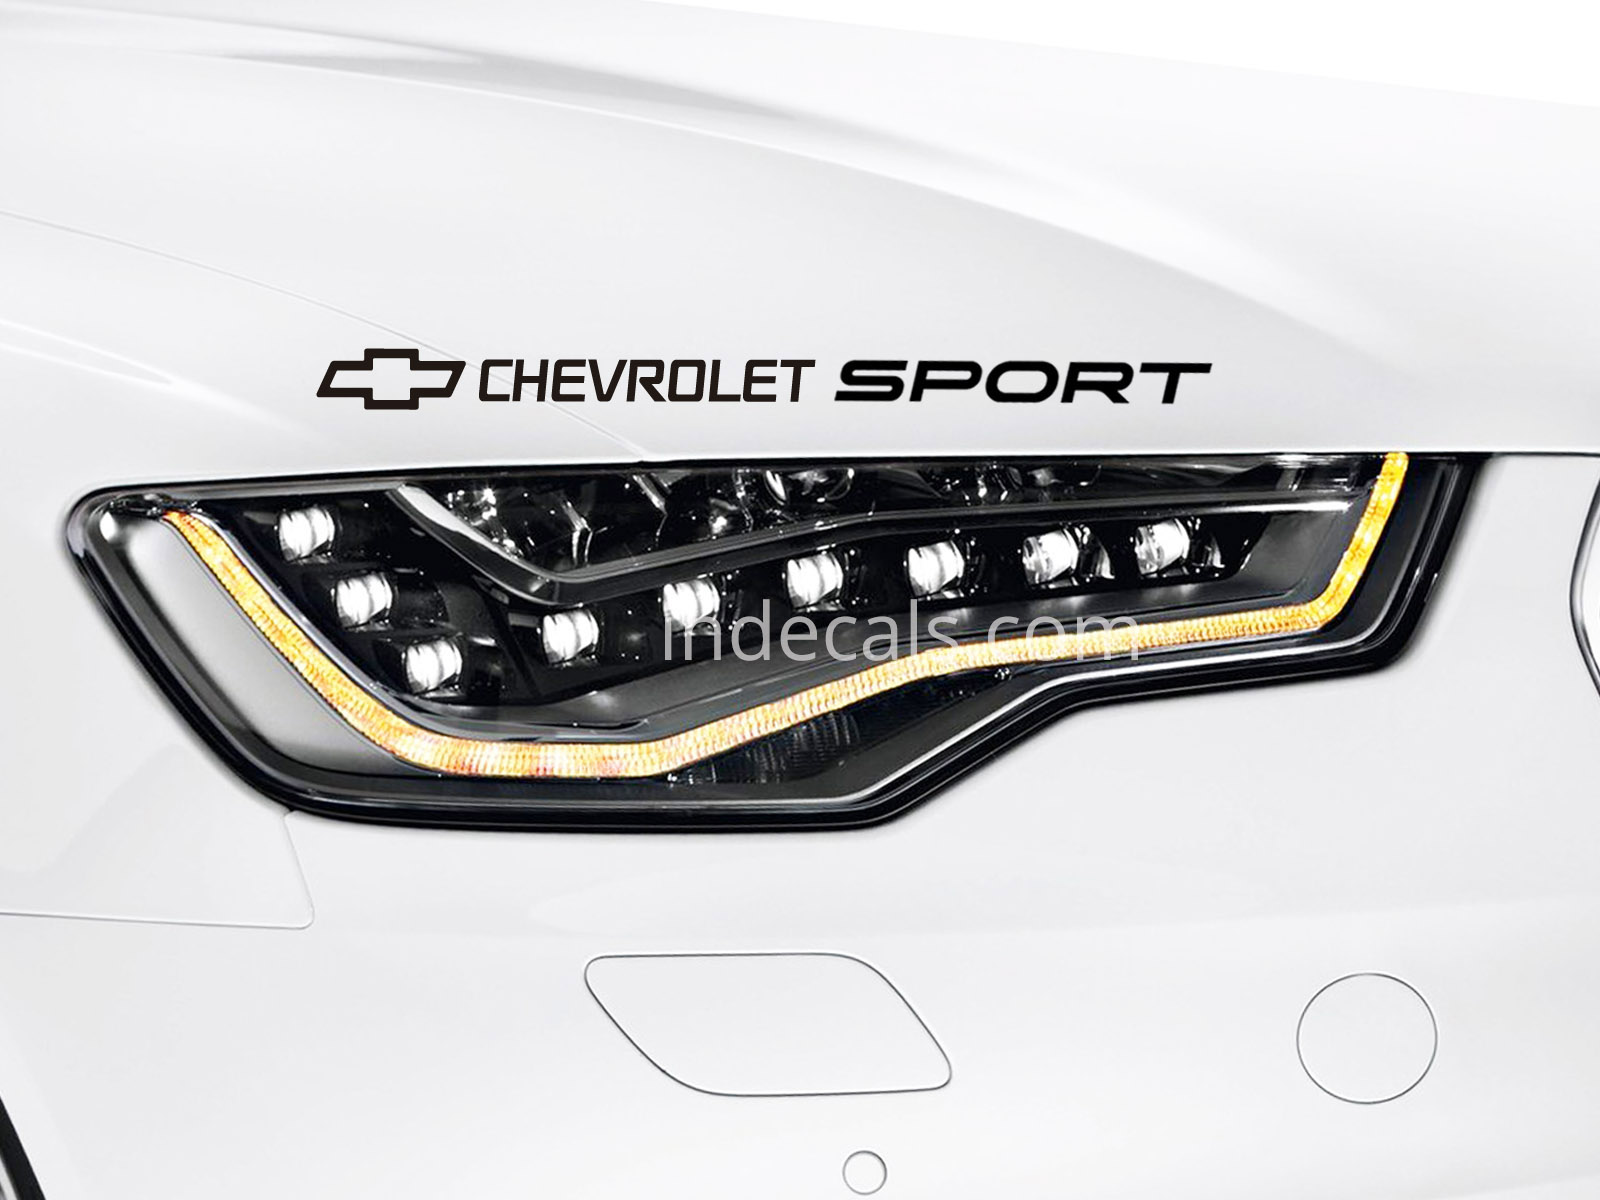 1 x Chevrolet Sport Sticker - Black